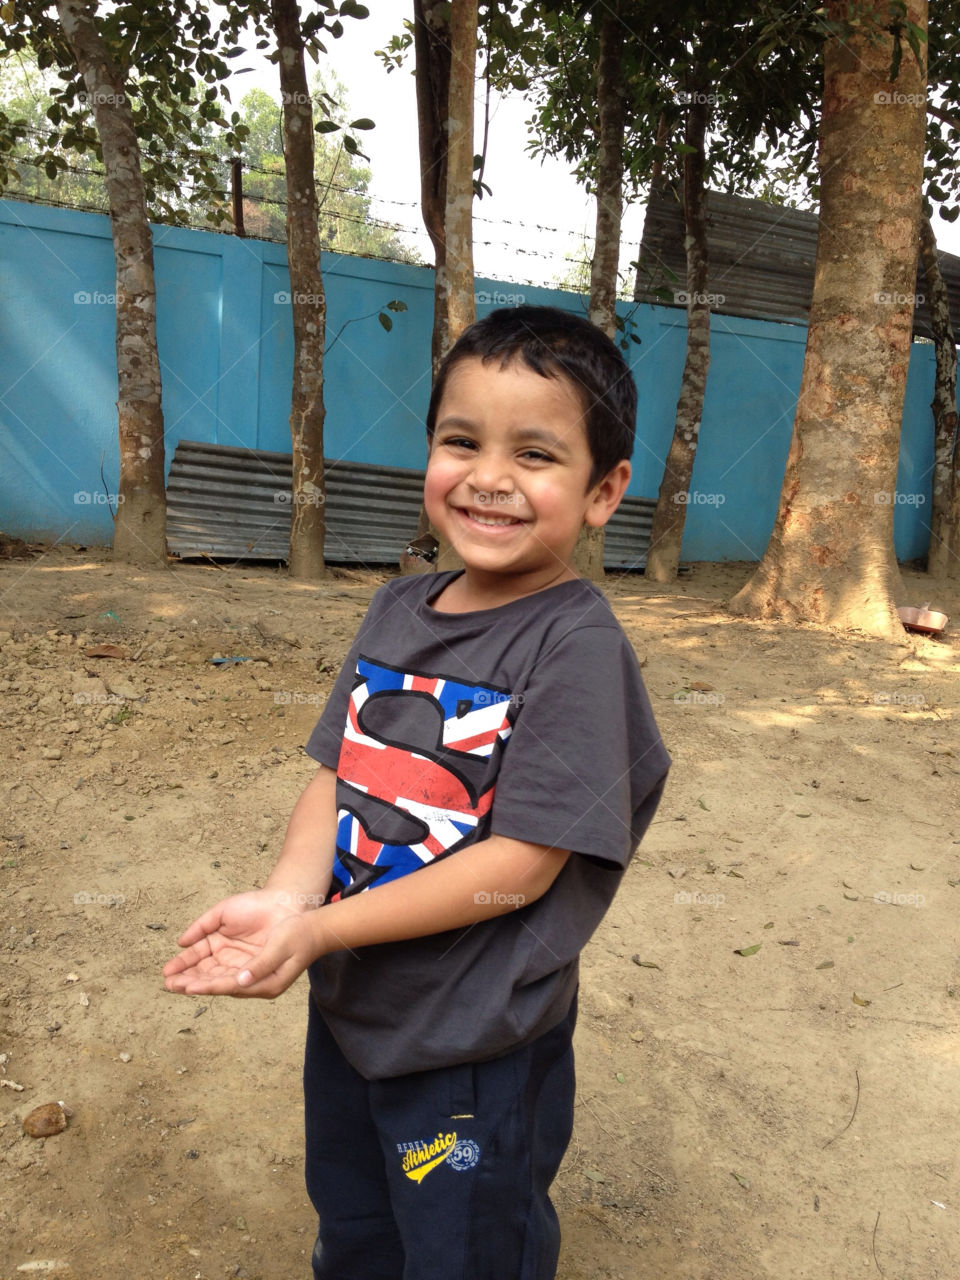 sylhet smile boy bangladesh by uzzidaman